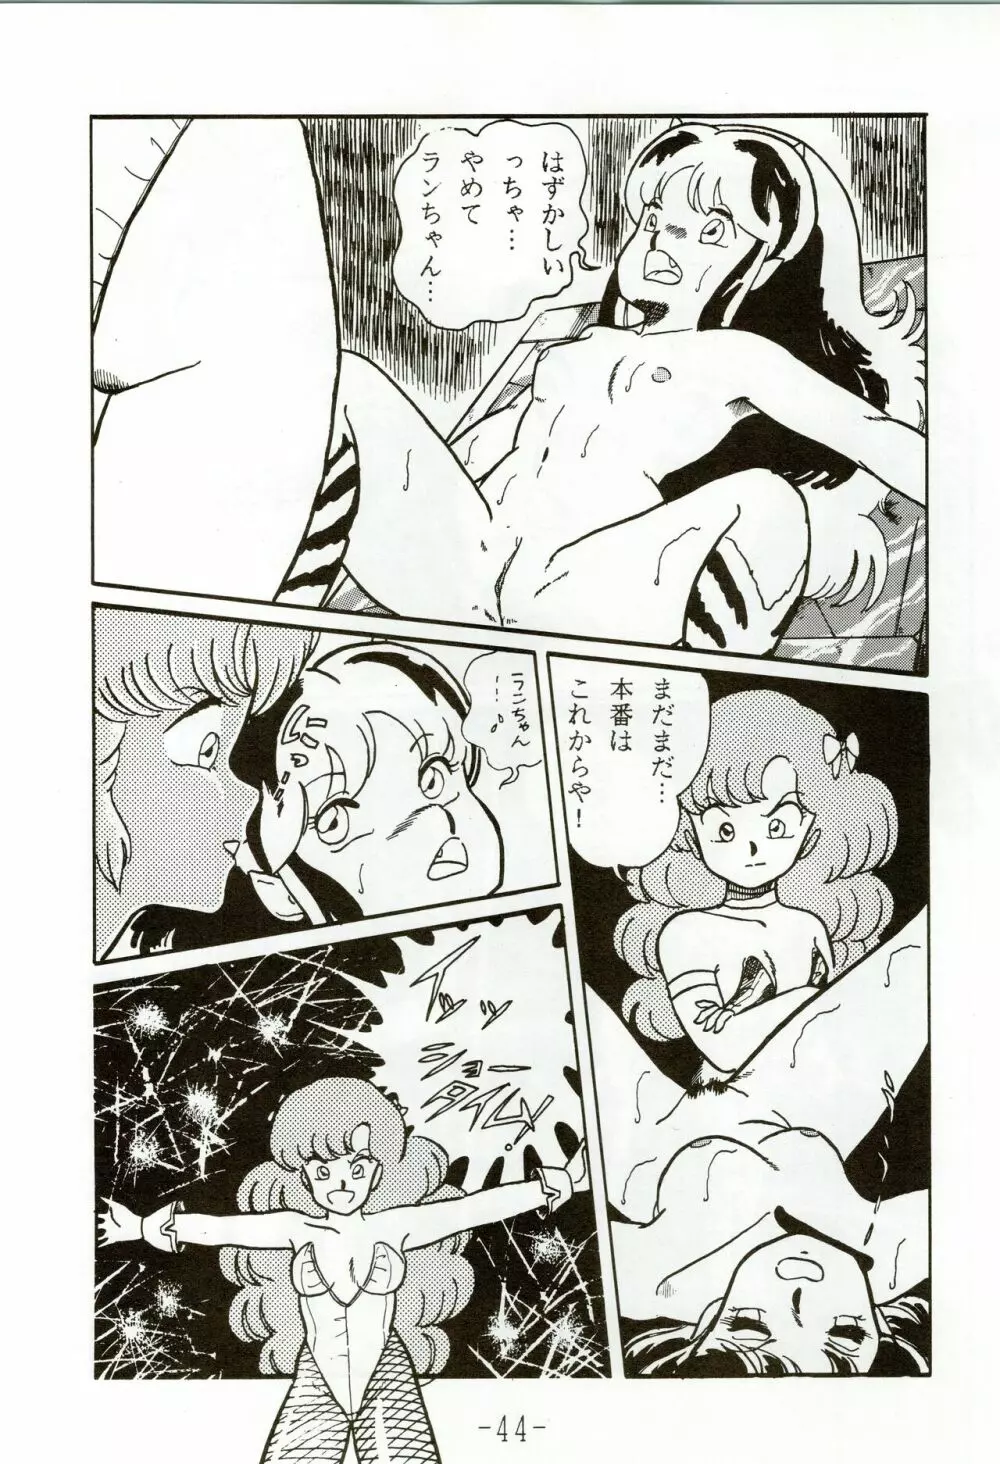 甲冑伝説 - page44